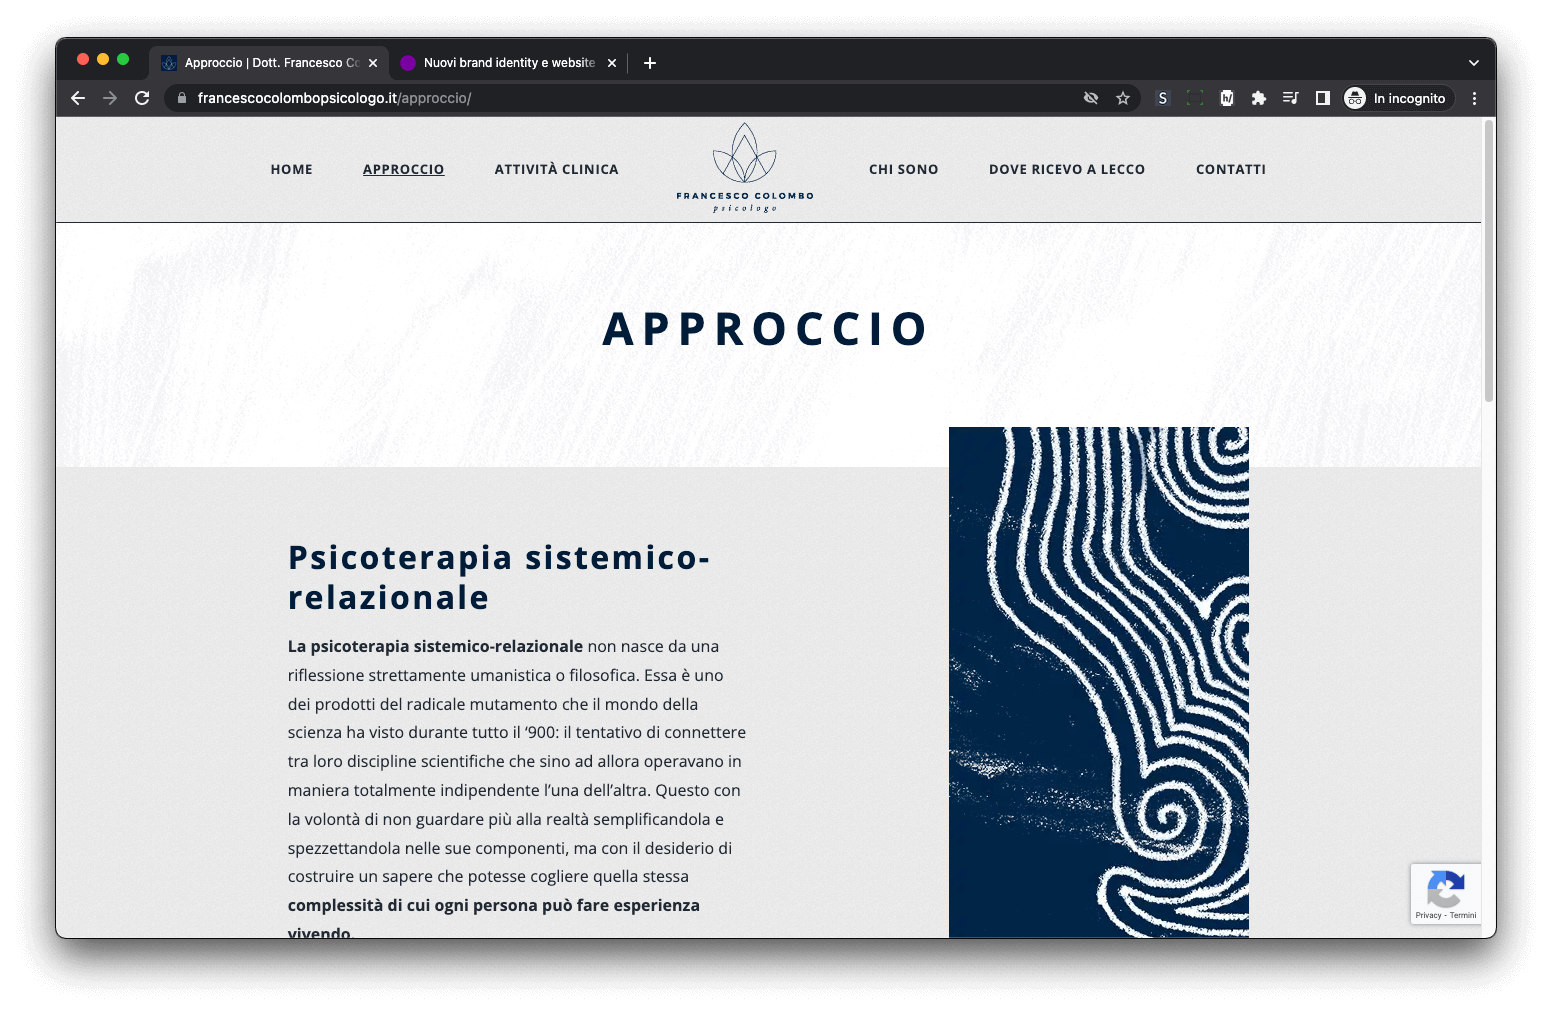 Page "Approach" of Dr. Francesco Colombo Psychologist's website